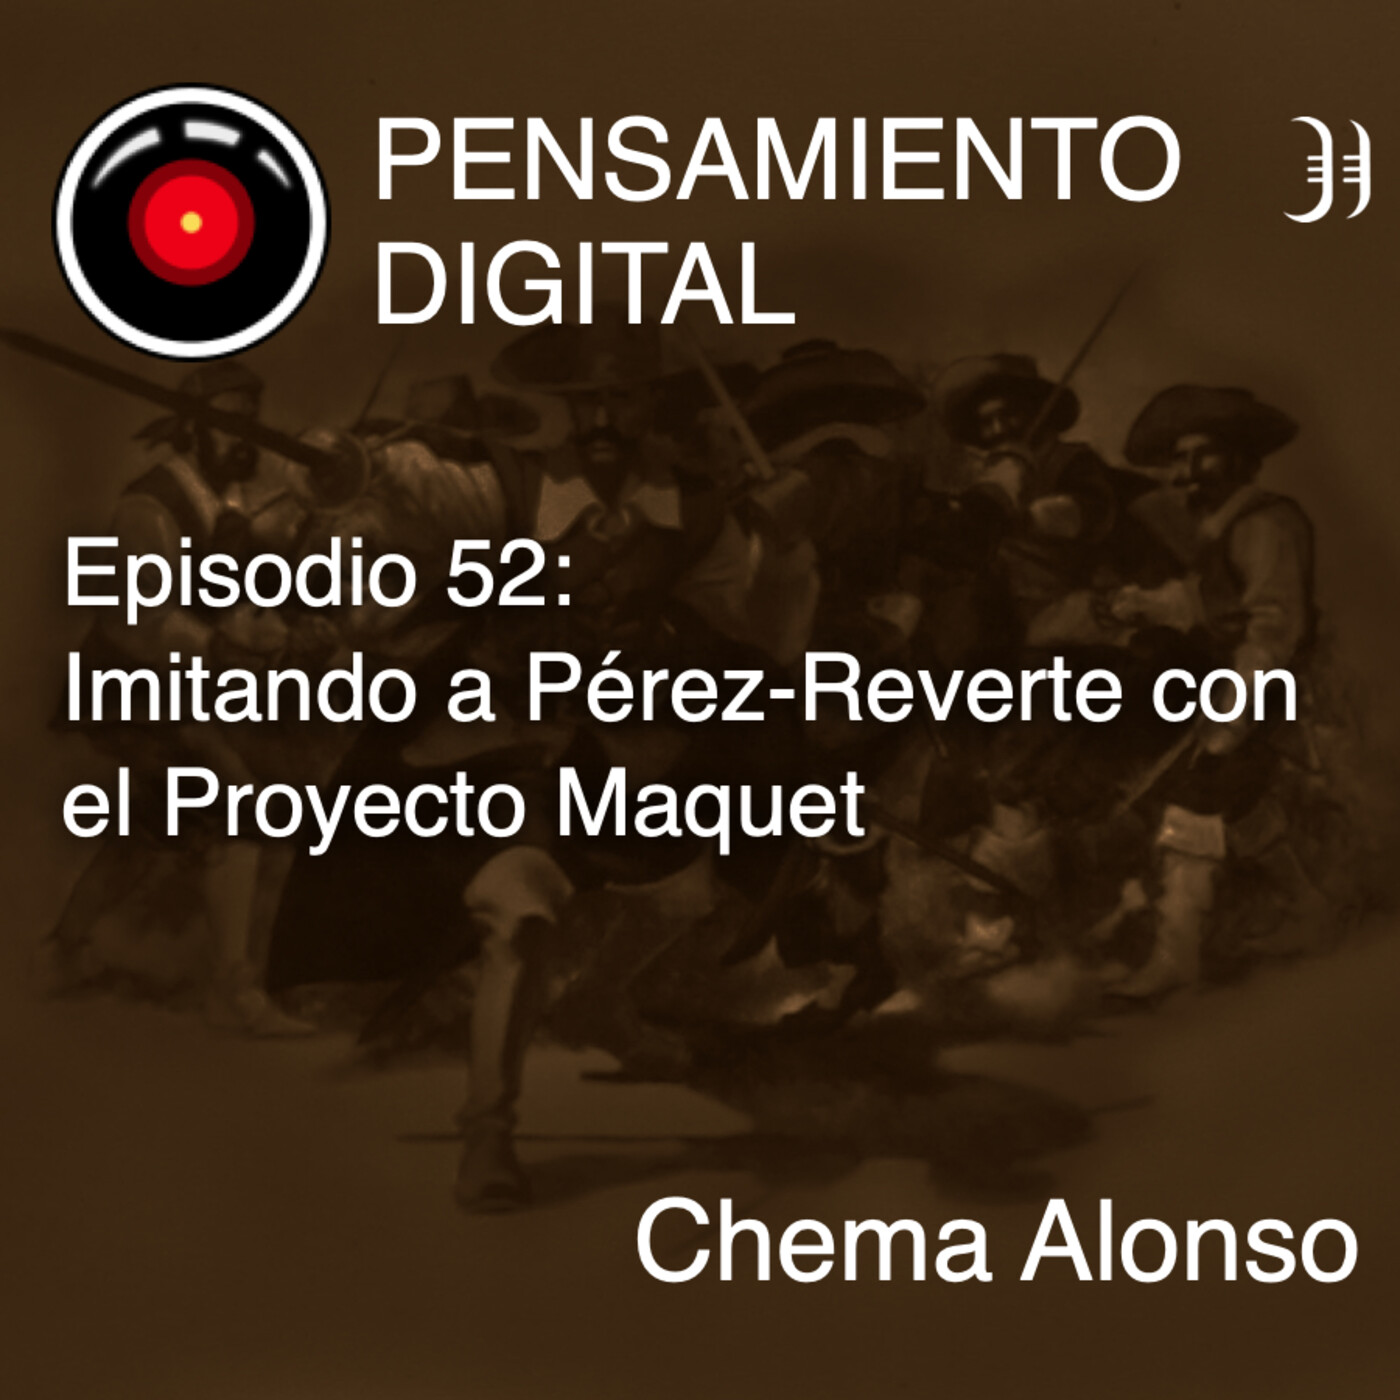 Episodio 52: Imitando a Pérez-Reverte con el Proyecto Maquet, con Chema Alonso